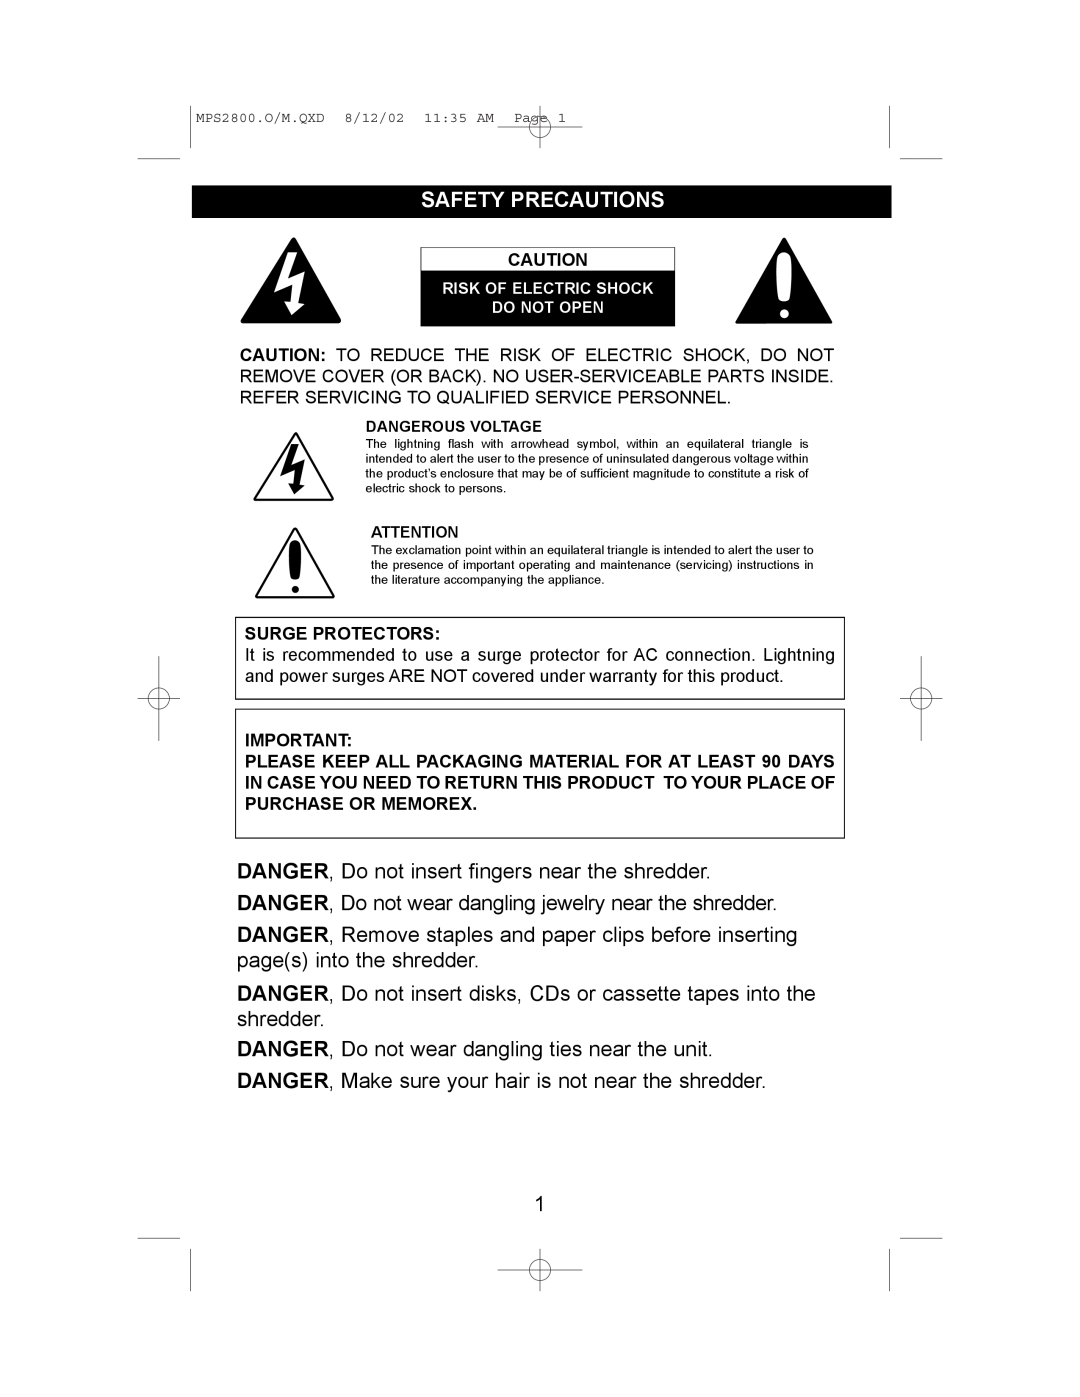 Memorex MPS2800 manual Safety Precautions 